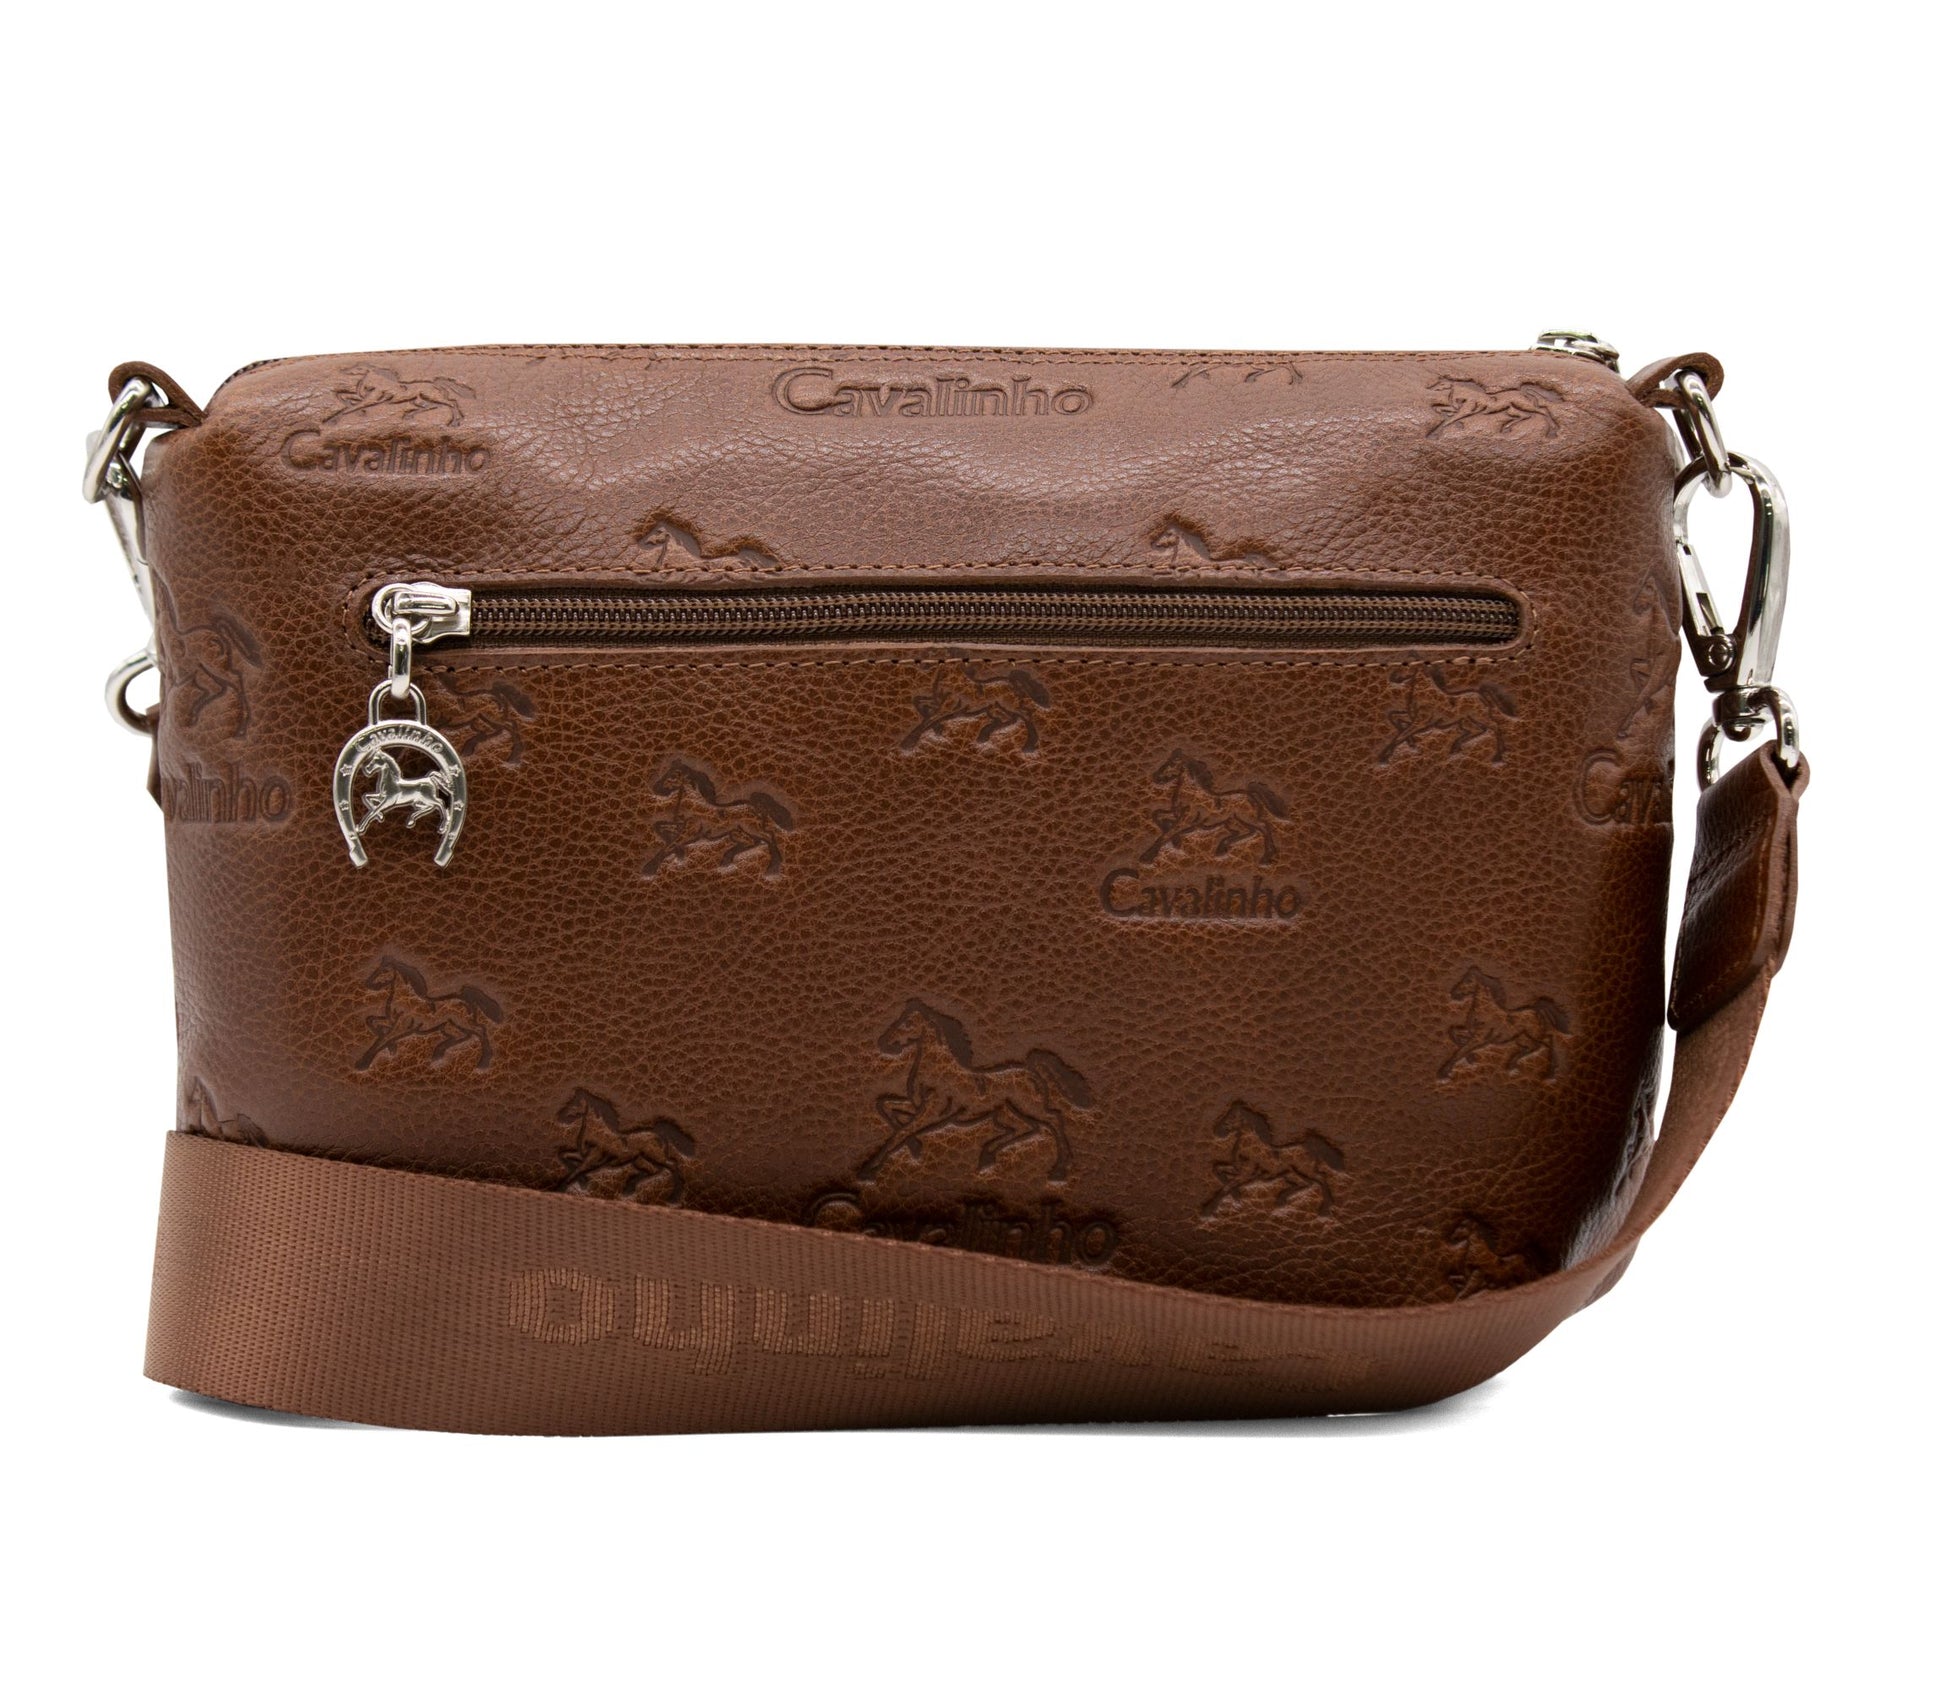 Cavalinho Cavalo Lusitano Leather Crossbody Bag - SaddleBrown - 18090401.13_3